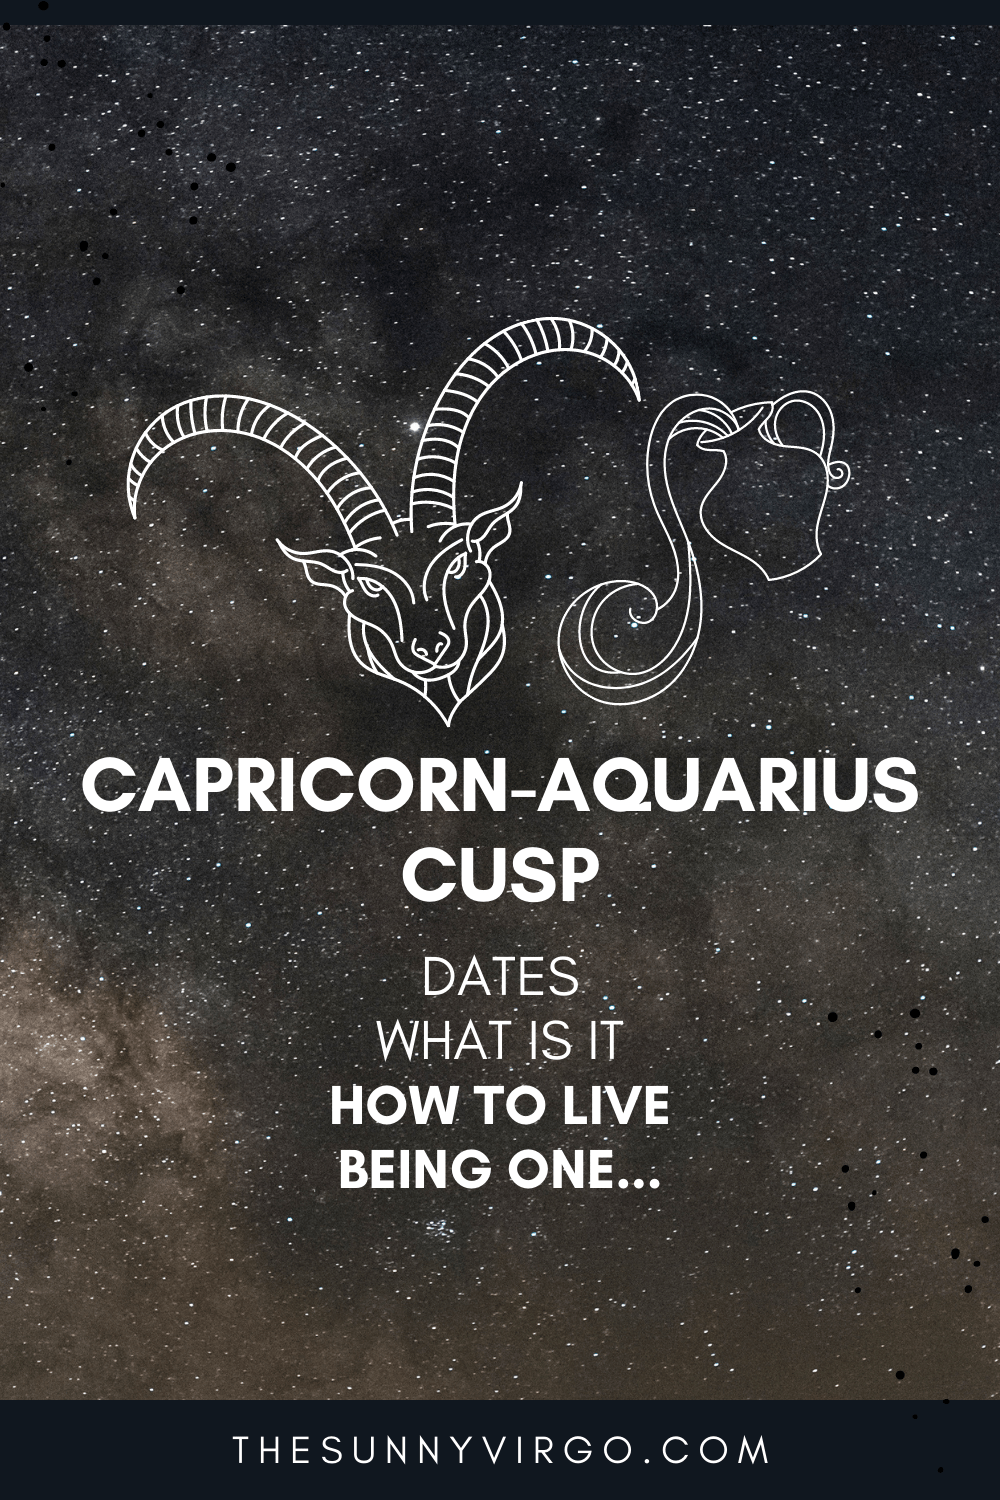 Is a Capricorn and Aquarius a good match?